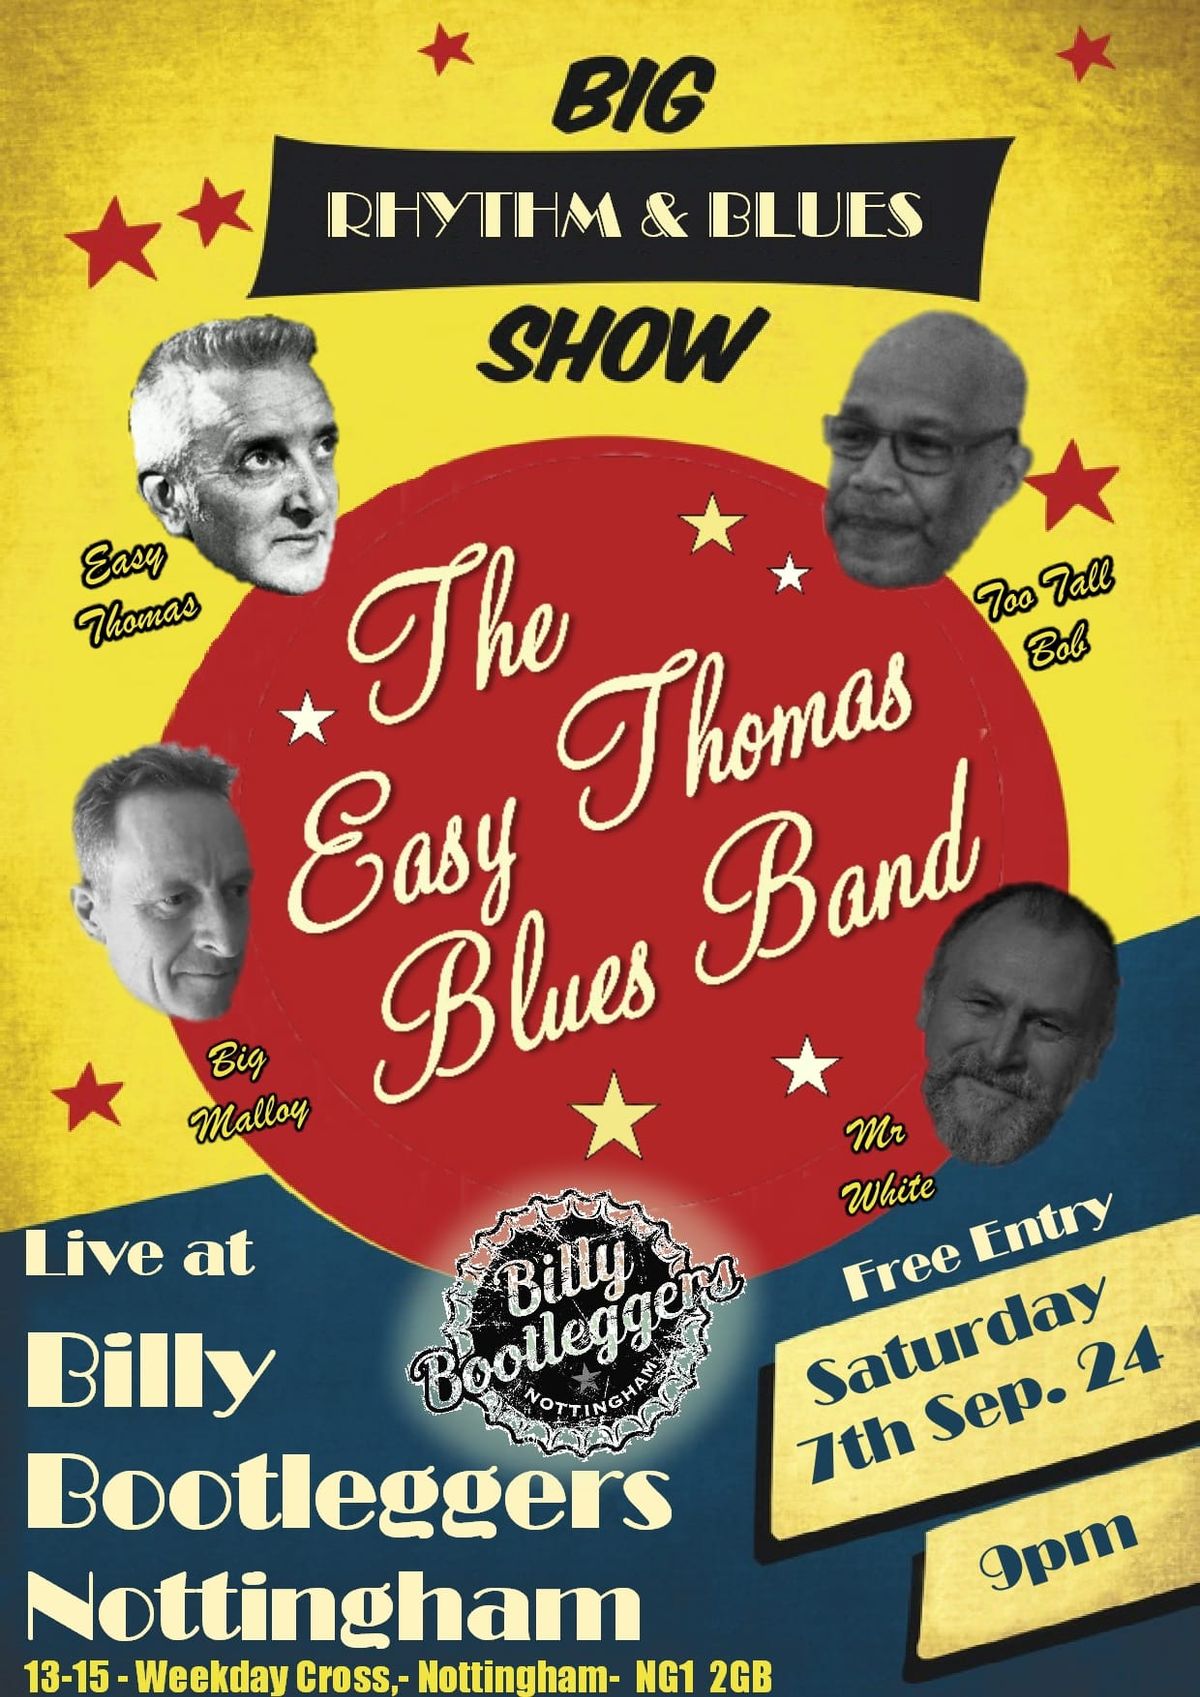 Easy Thomas Blues Band at Billy Bootleggers 